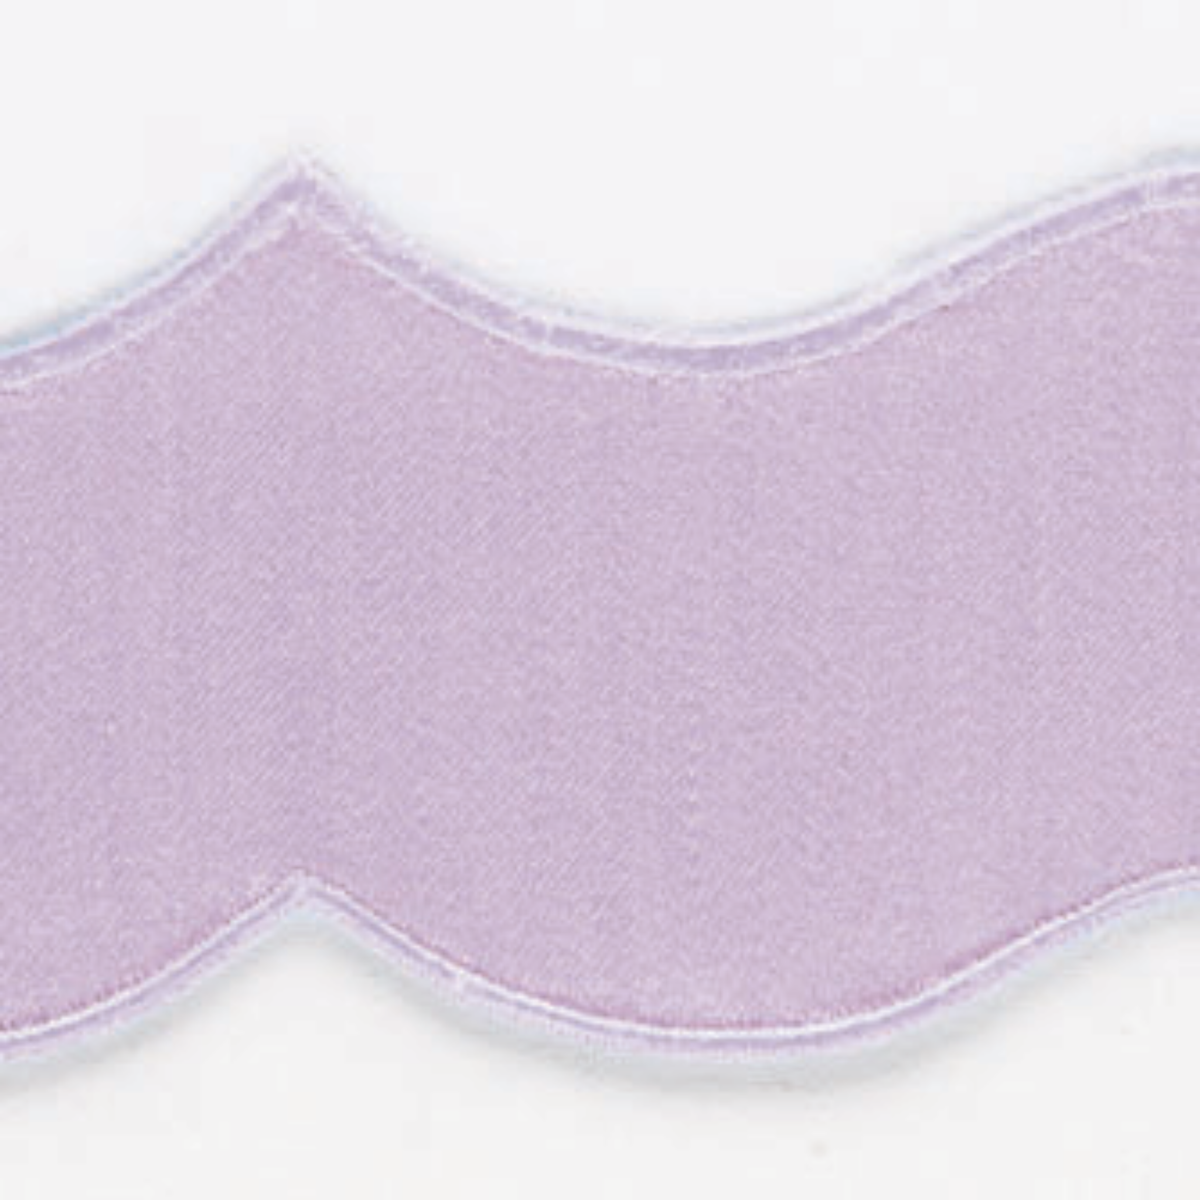 Swatch Sample of Matouk Lorelei Bedding in Violet Color